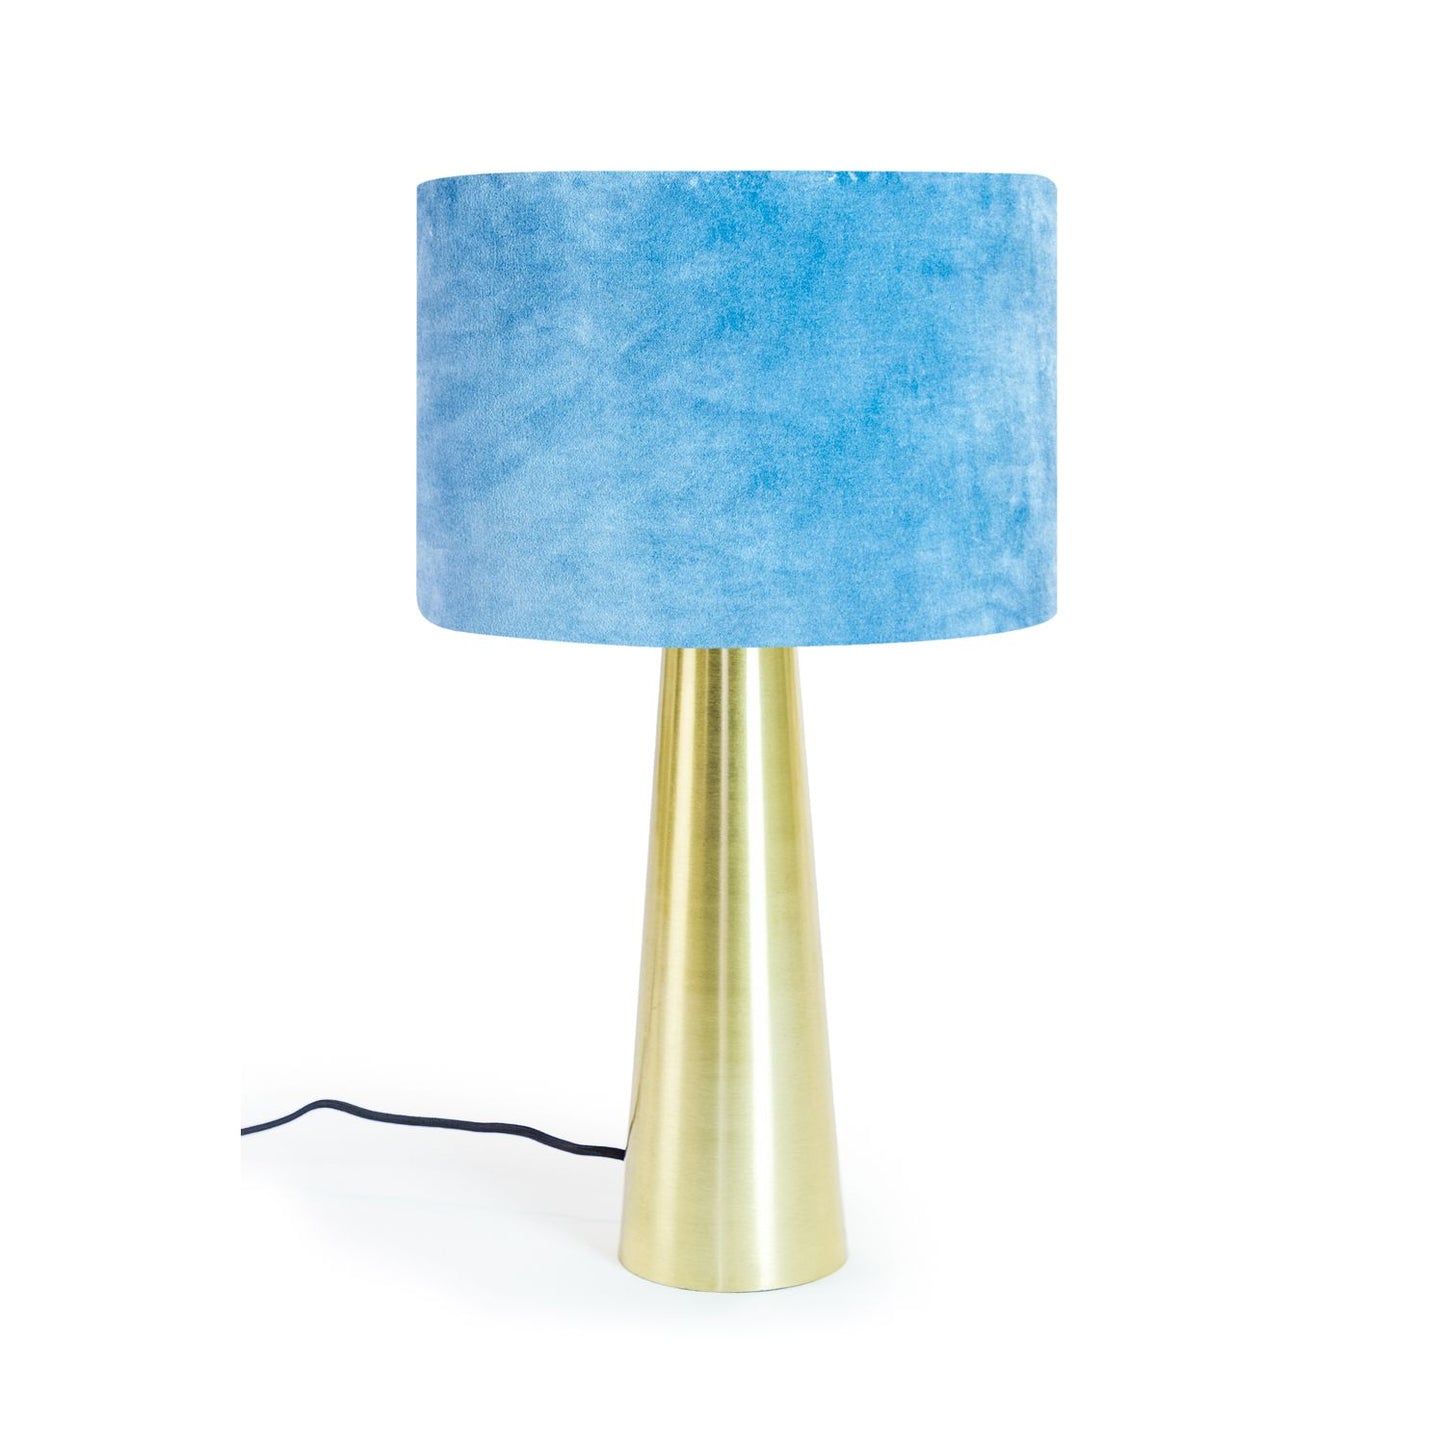 Brass Table Lamp With Velvet Shade - Steel Blue & Grey